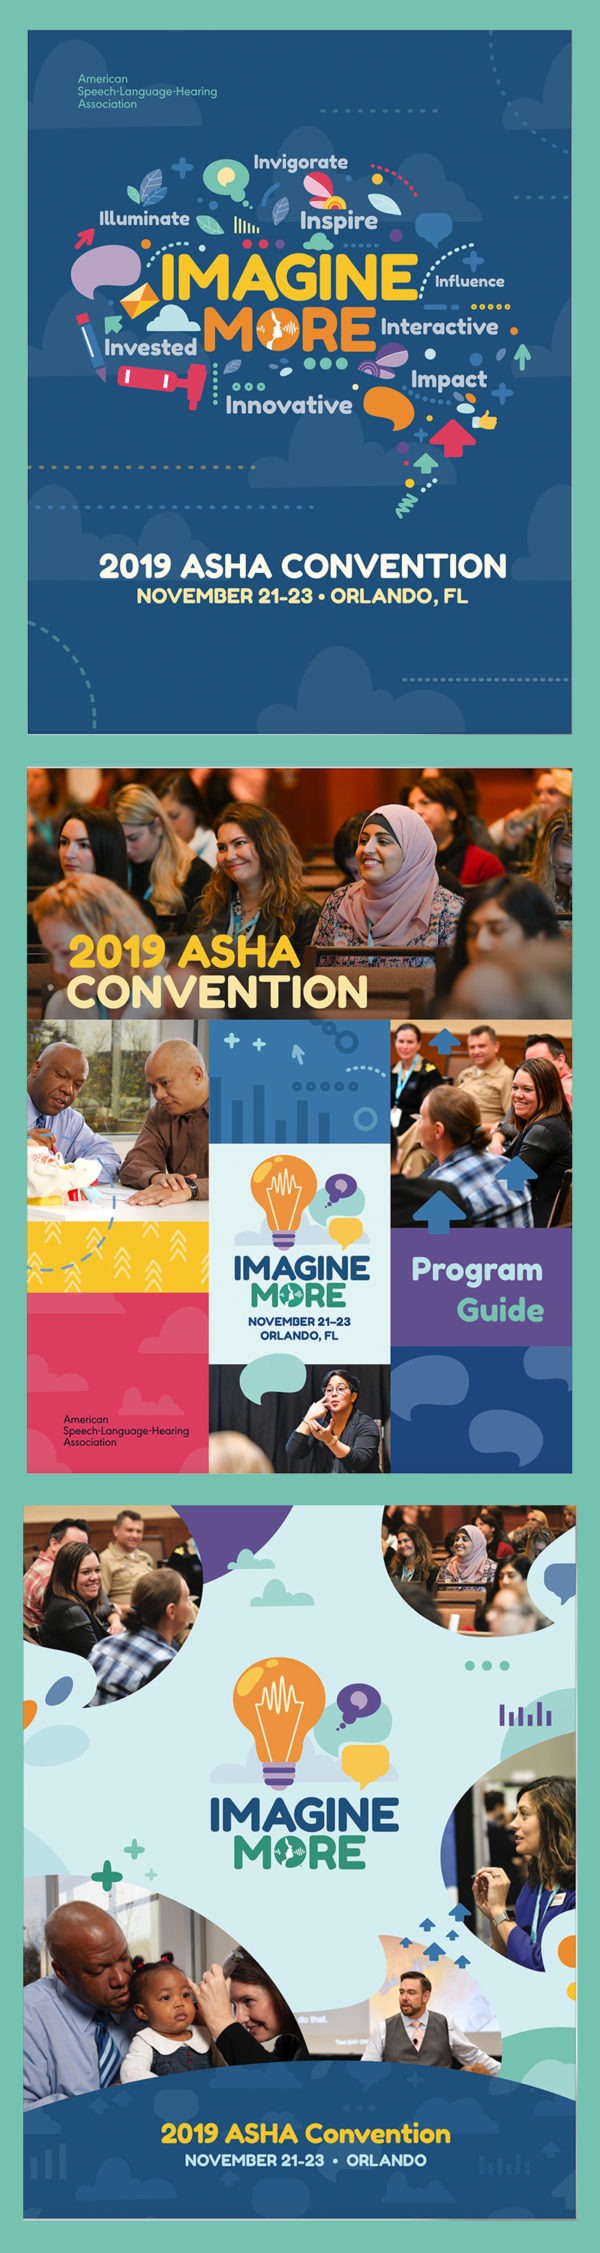 ASHA 2019 Convention Program Guide Cover Designs